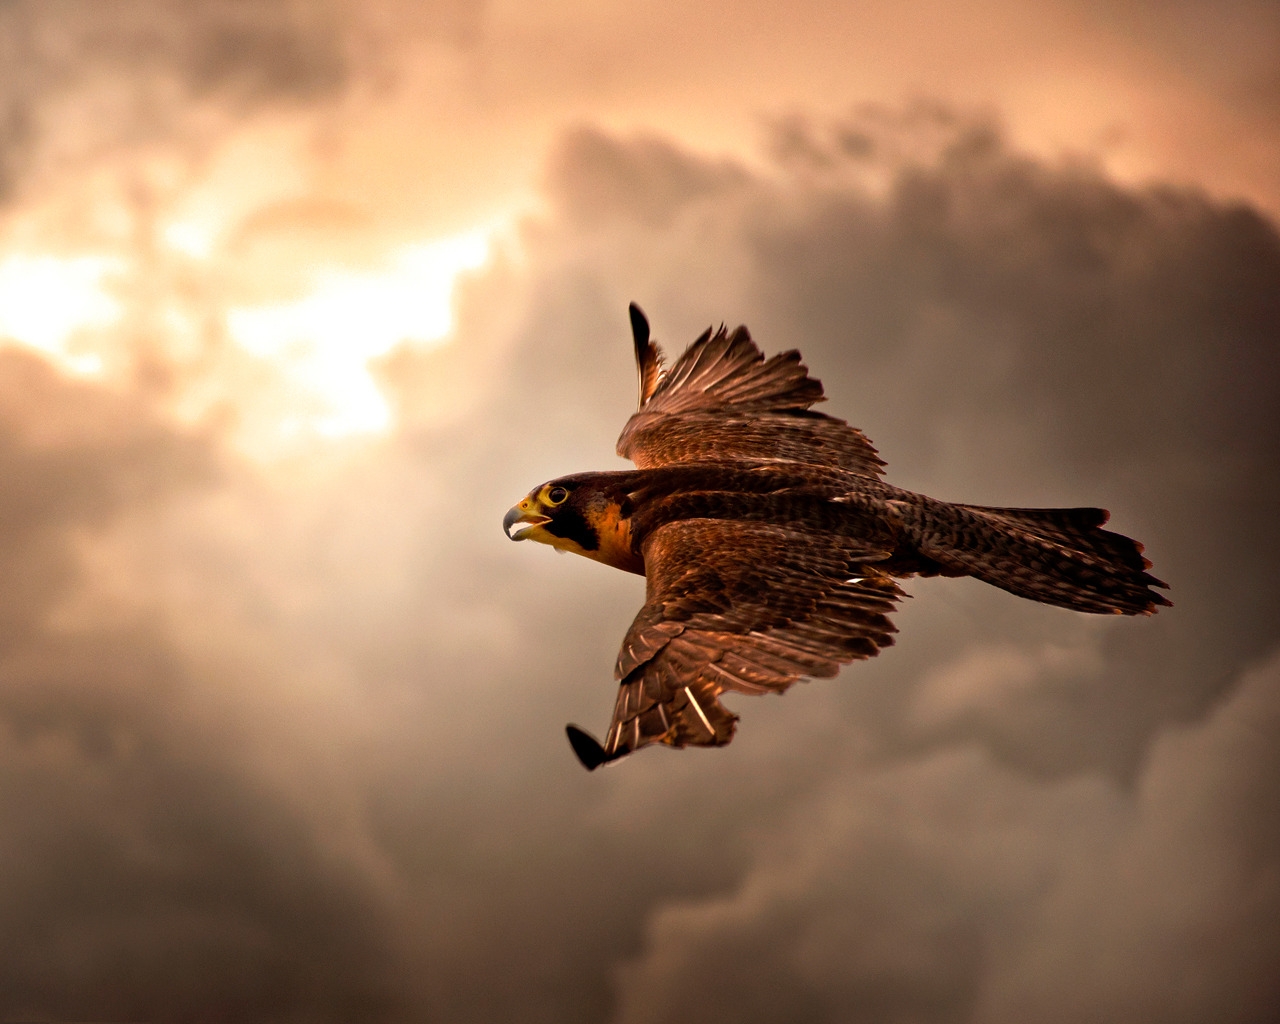 Falcon in Flight for 1280 x 1024 resolution